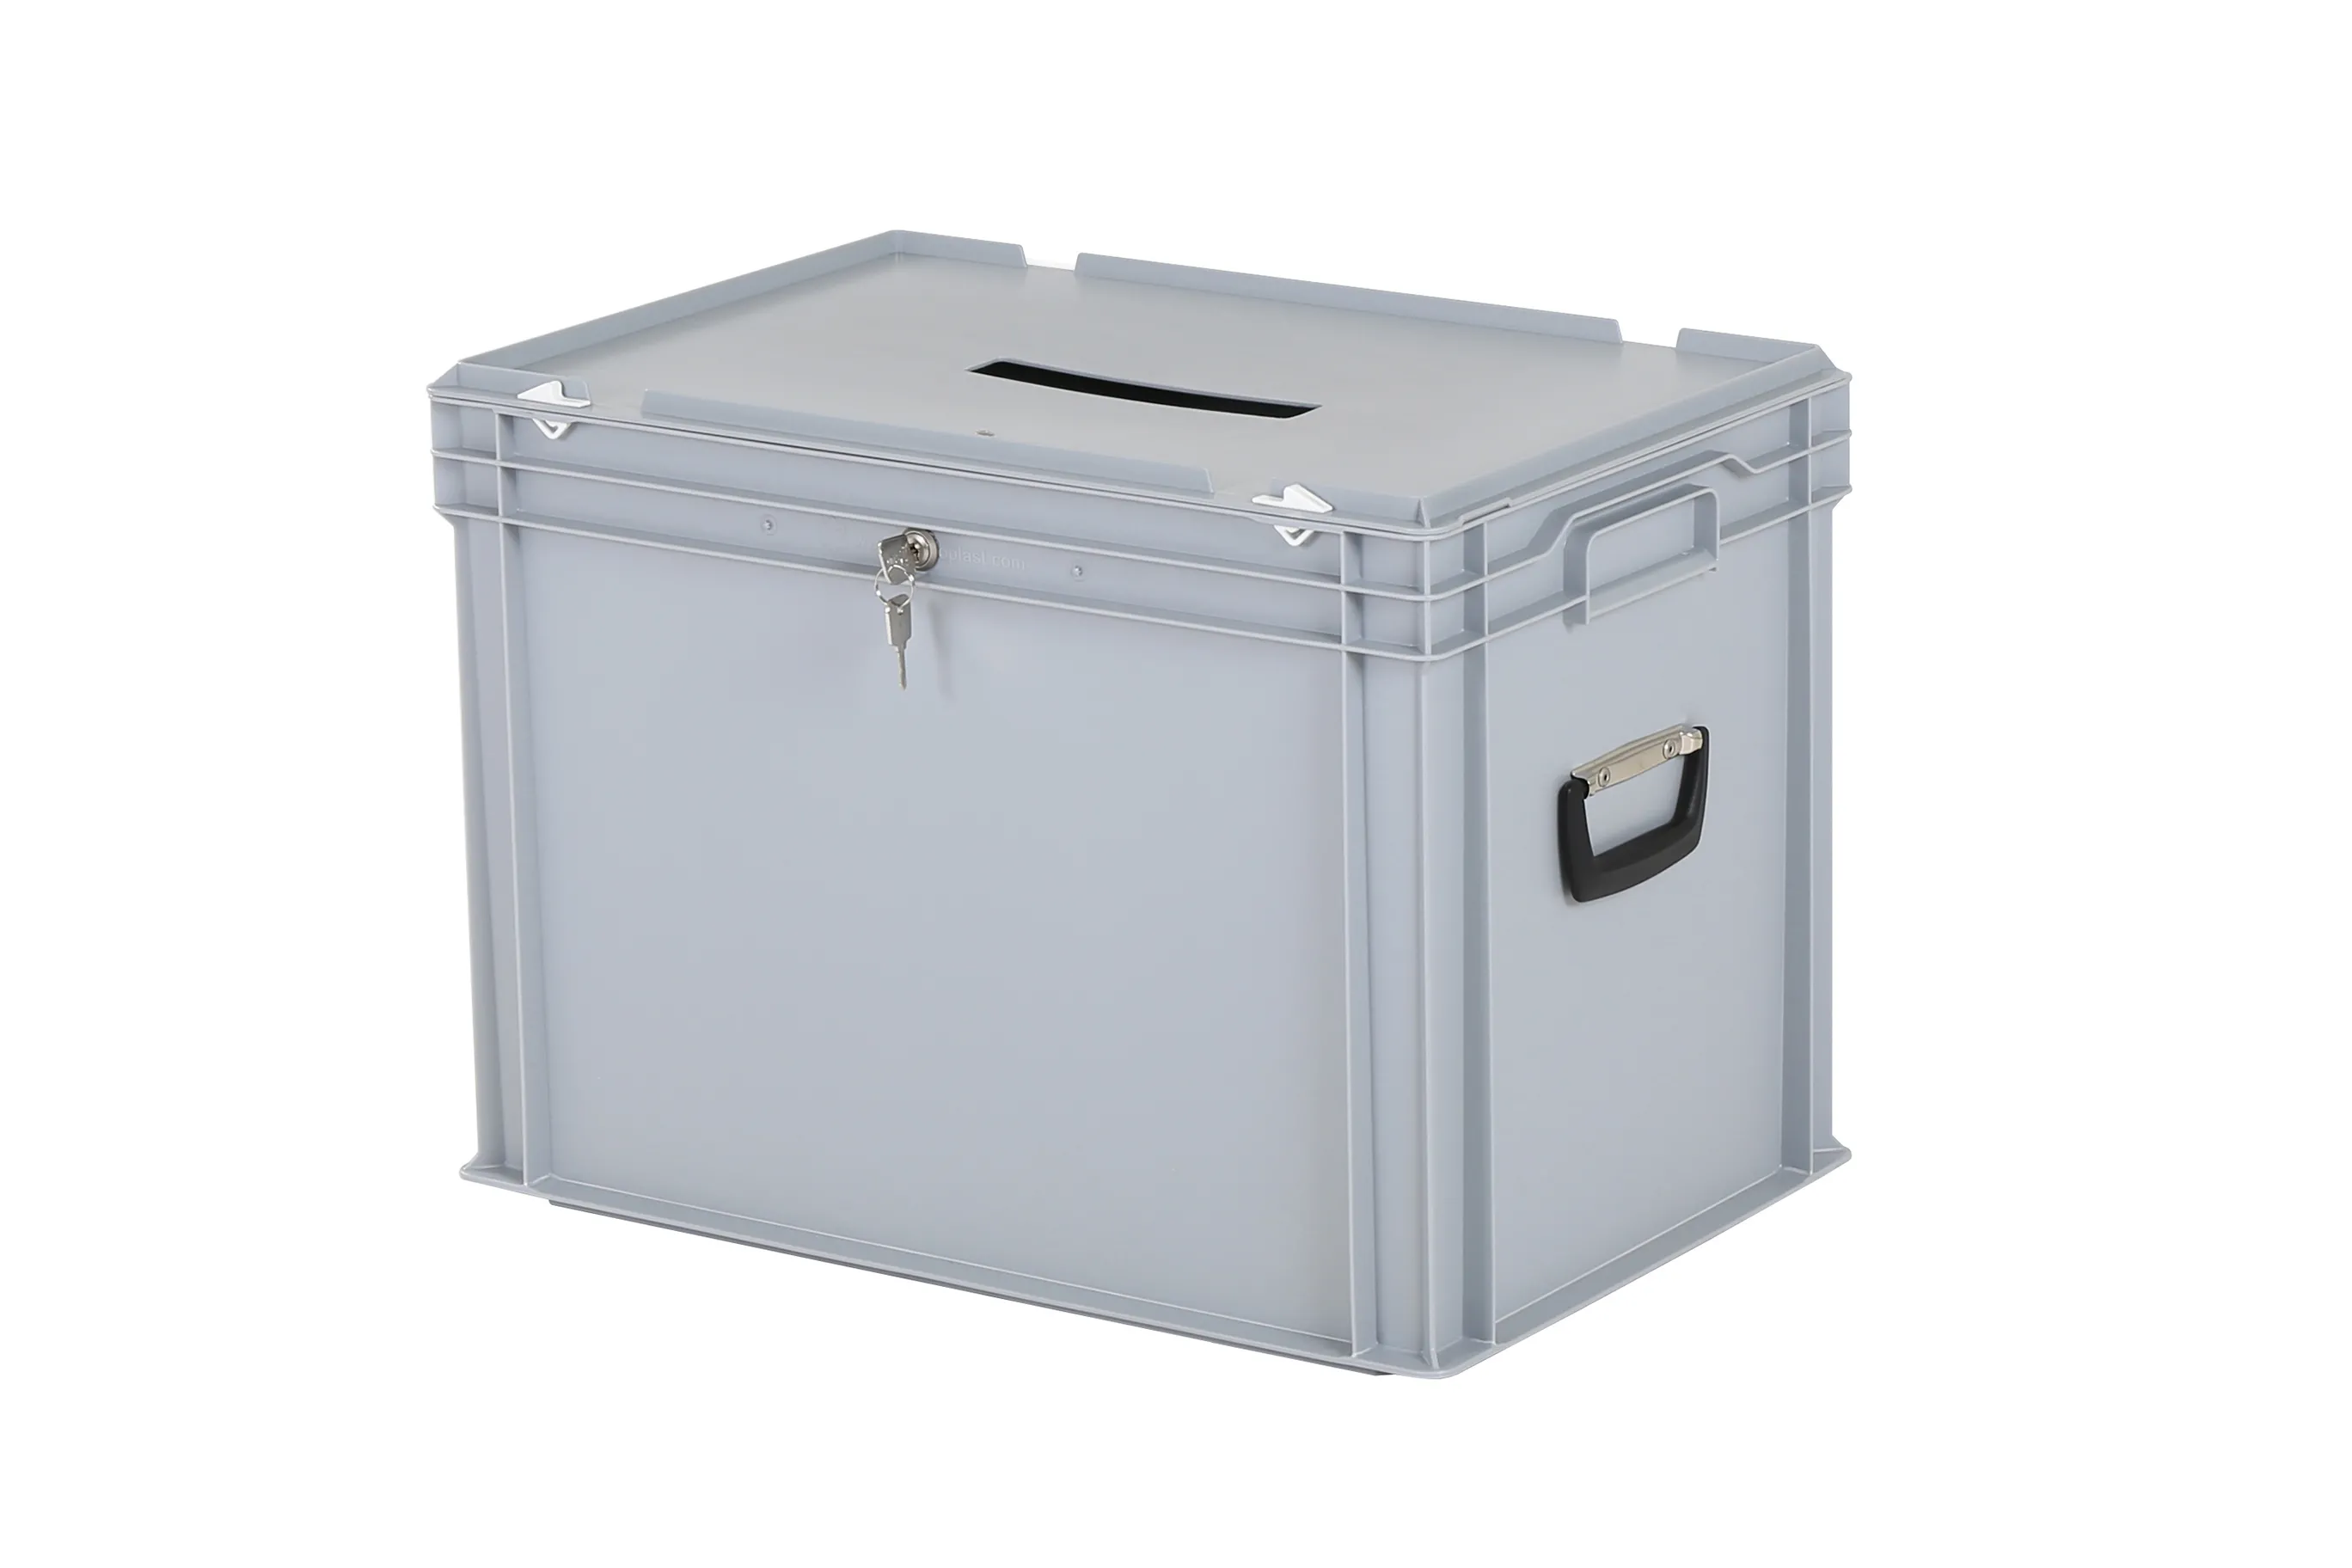 Ballot box | Transport box with insertion slot and lock - 600 x 400 x H 439 mm - grey | Keyed alike cylinder lock 